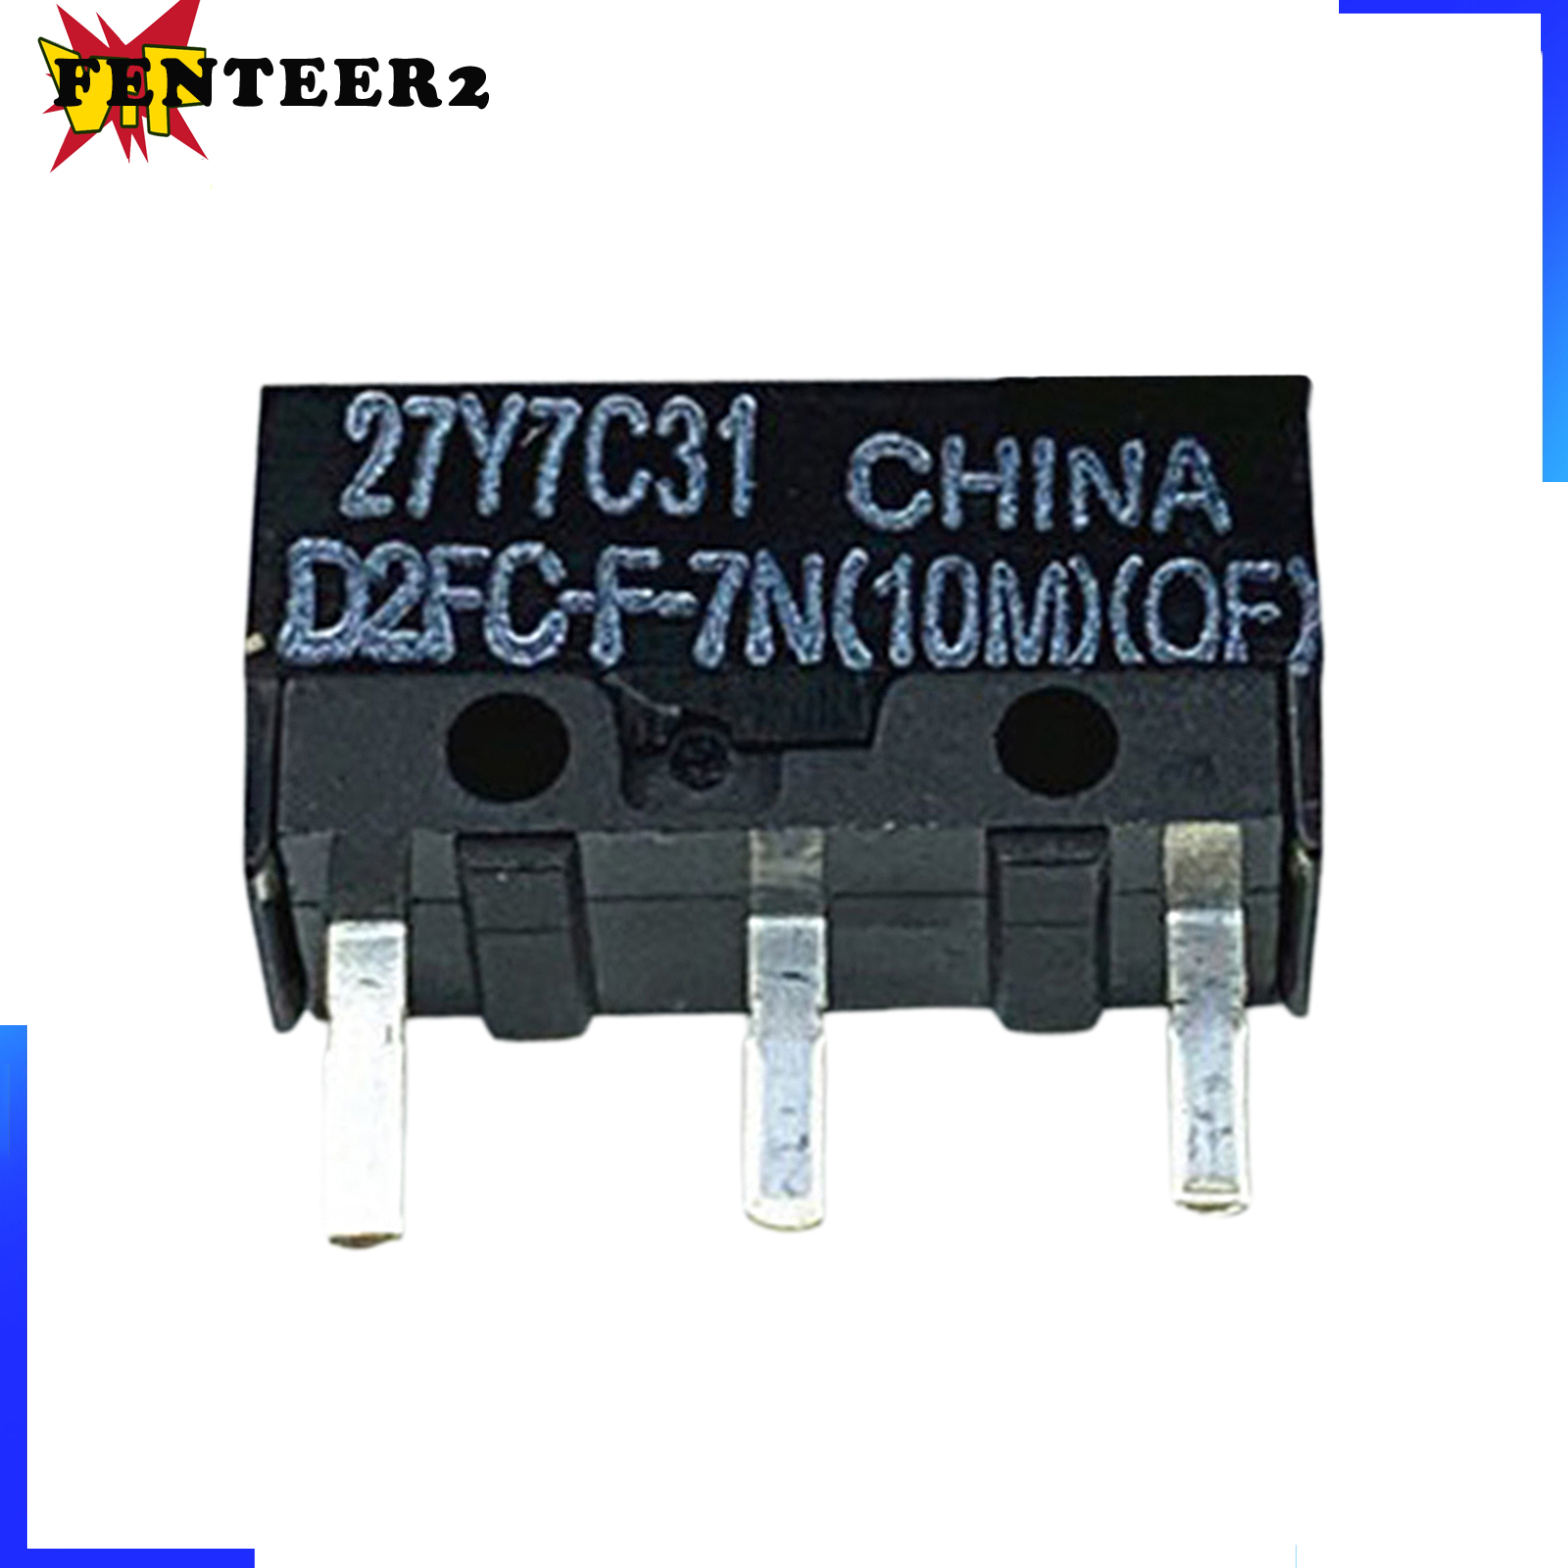 (Fenteer2 3c) Micro Switch Switch Cho Chuột